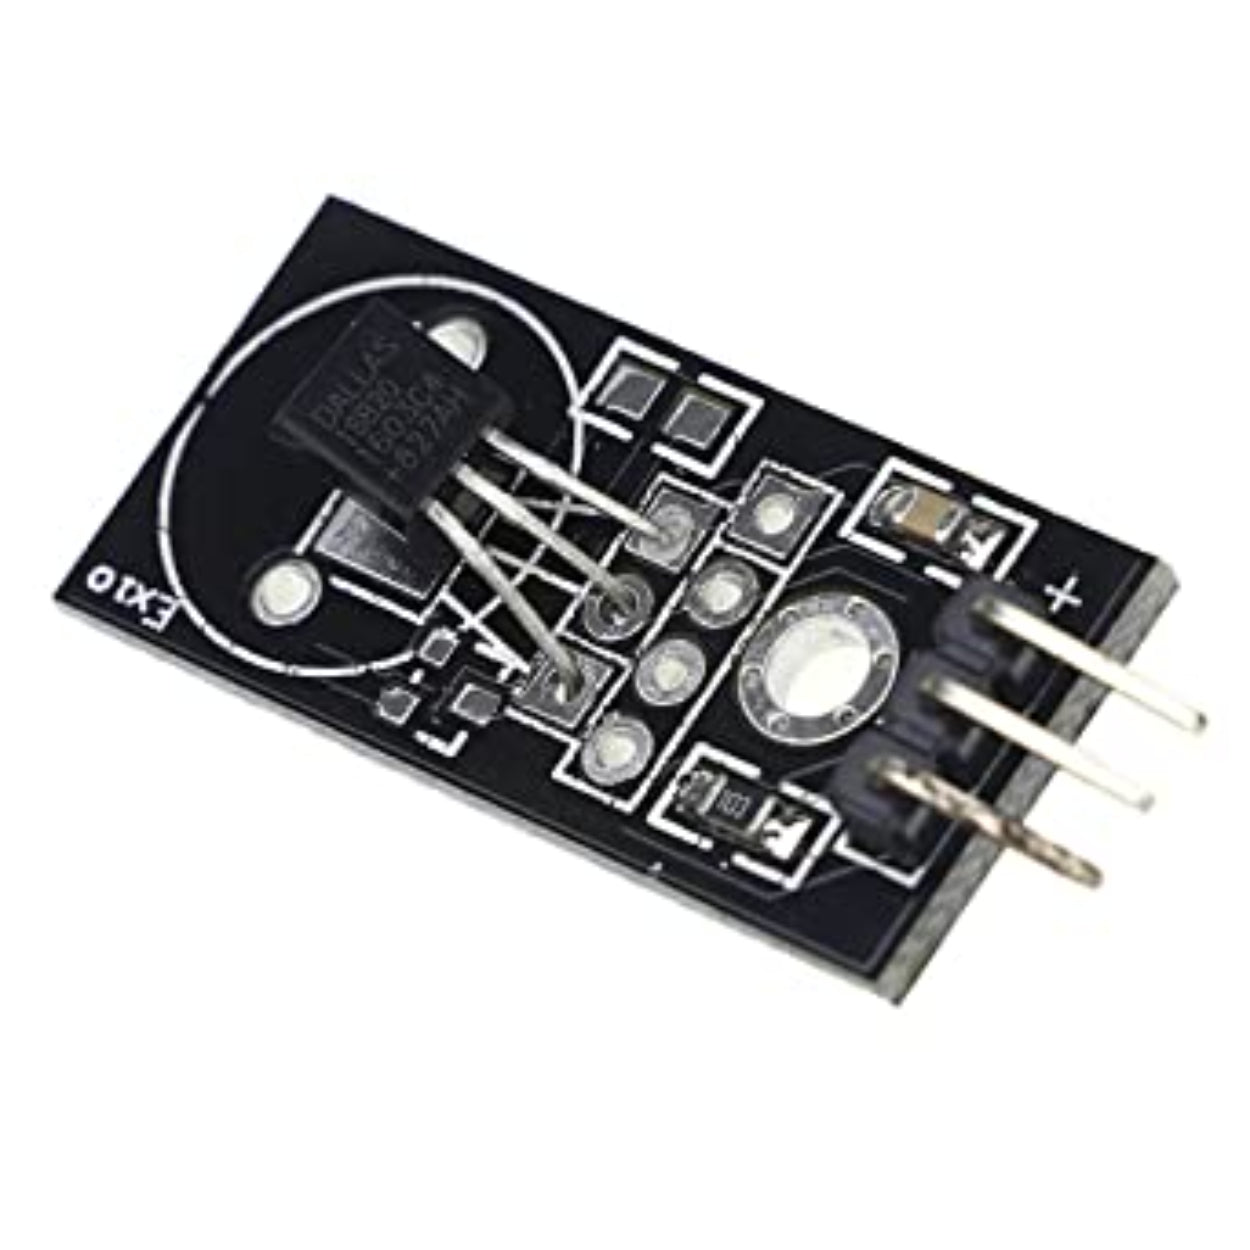 DS18B20 Digital Temperature Sensor Module - ProtoSupplies